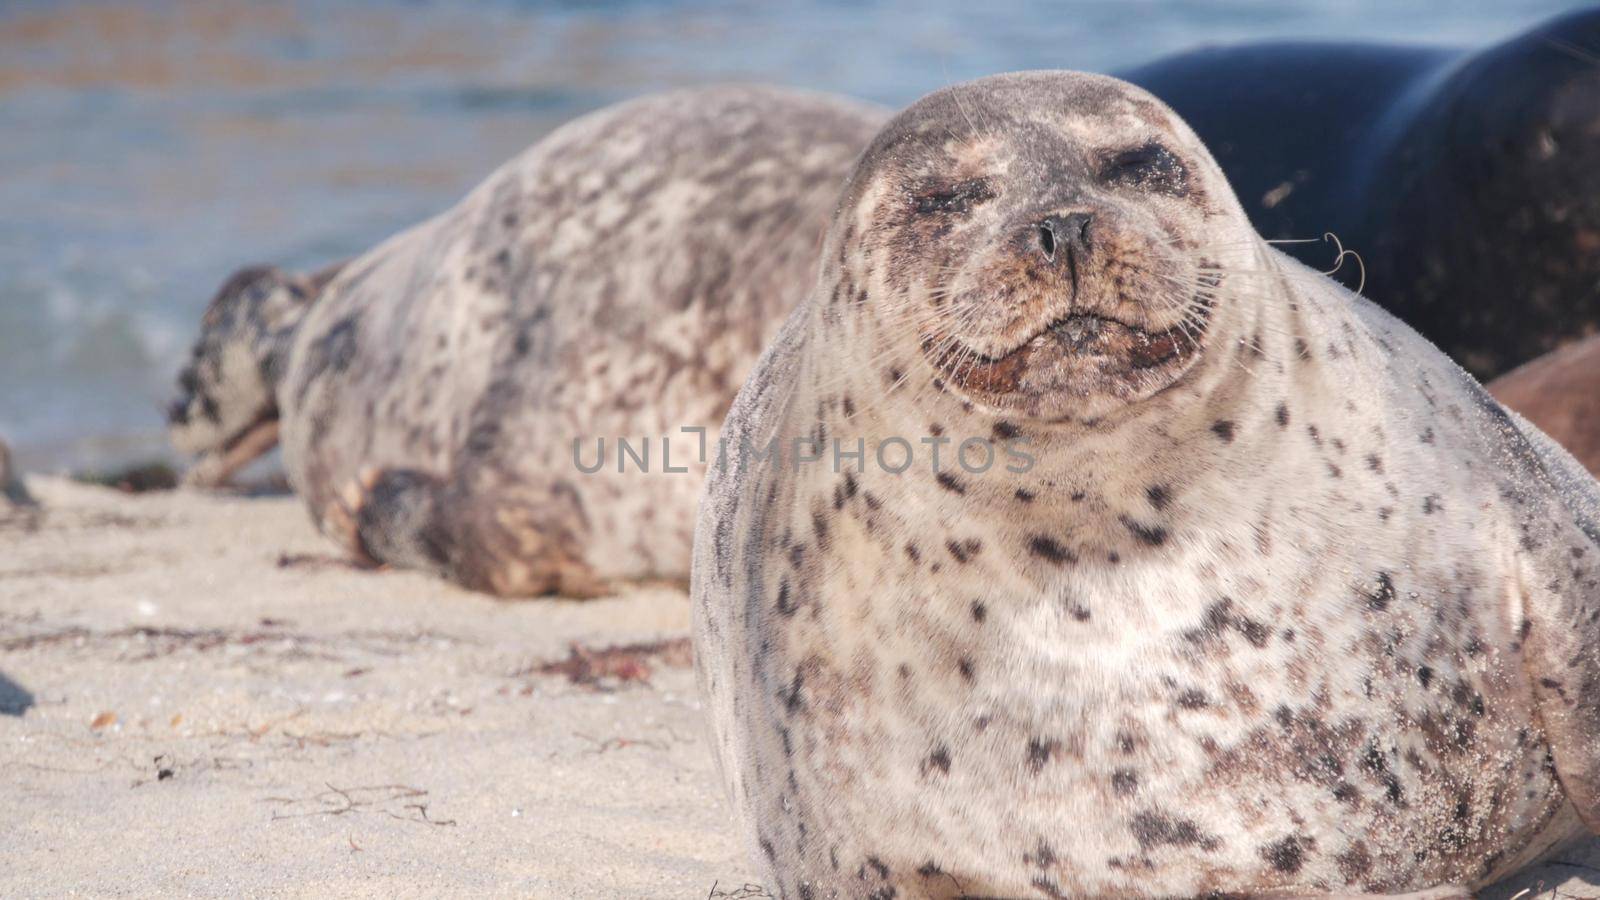 Cute wild spotted fur seal, pacific harbor sea lion resting, sandy ocean beach, La Jolla wildlife, California coast, USA. Young marine animal crawling in freedom or natural habitat bysea water waves.